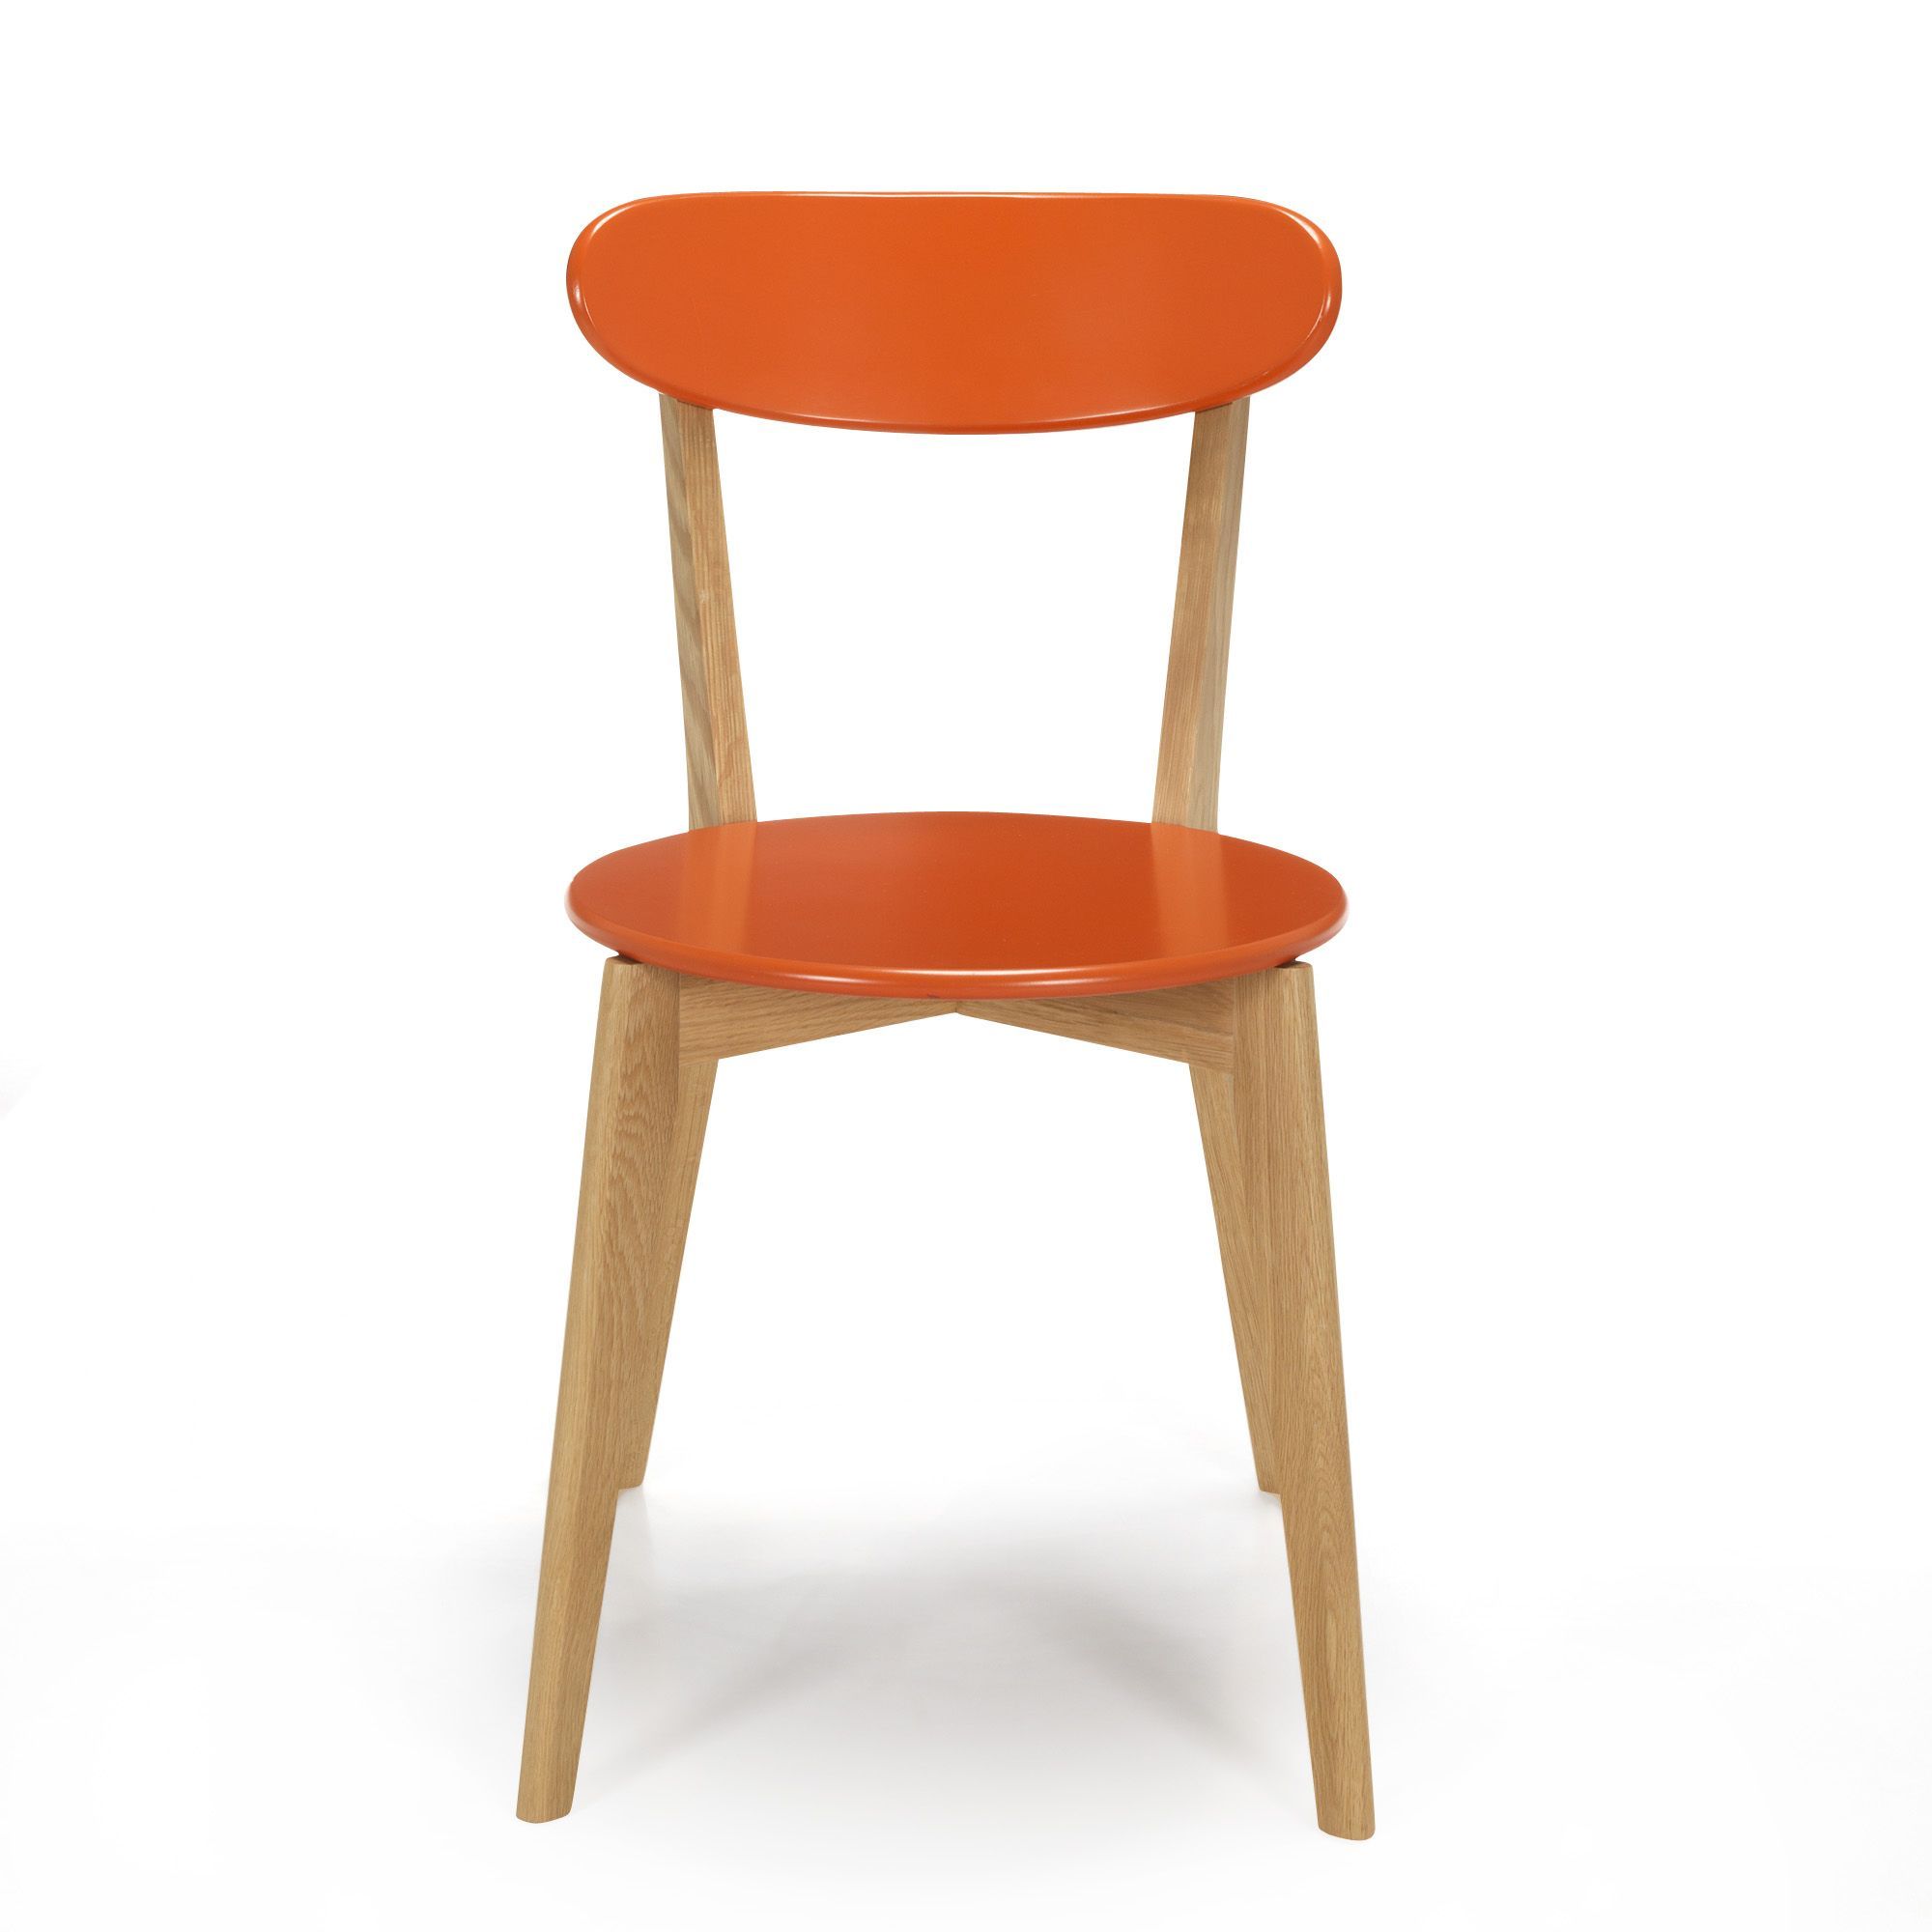 Chaise design scandinave alinea